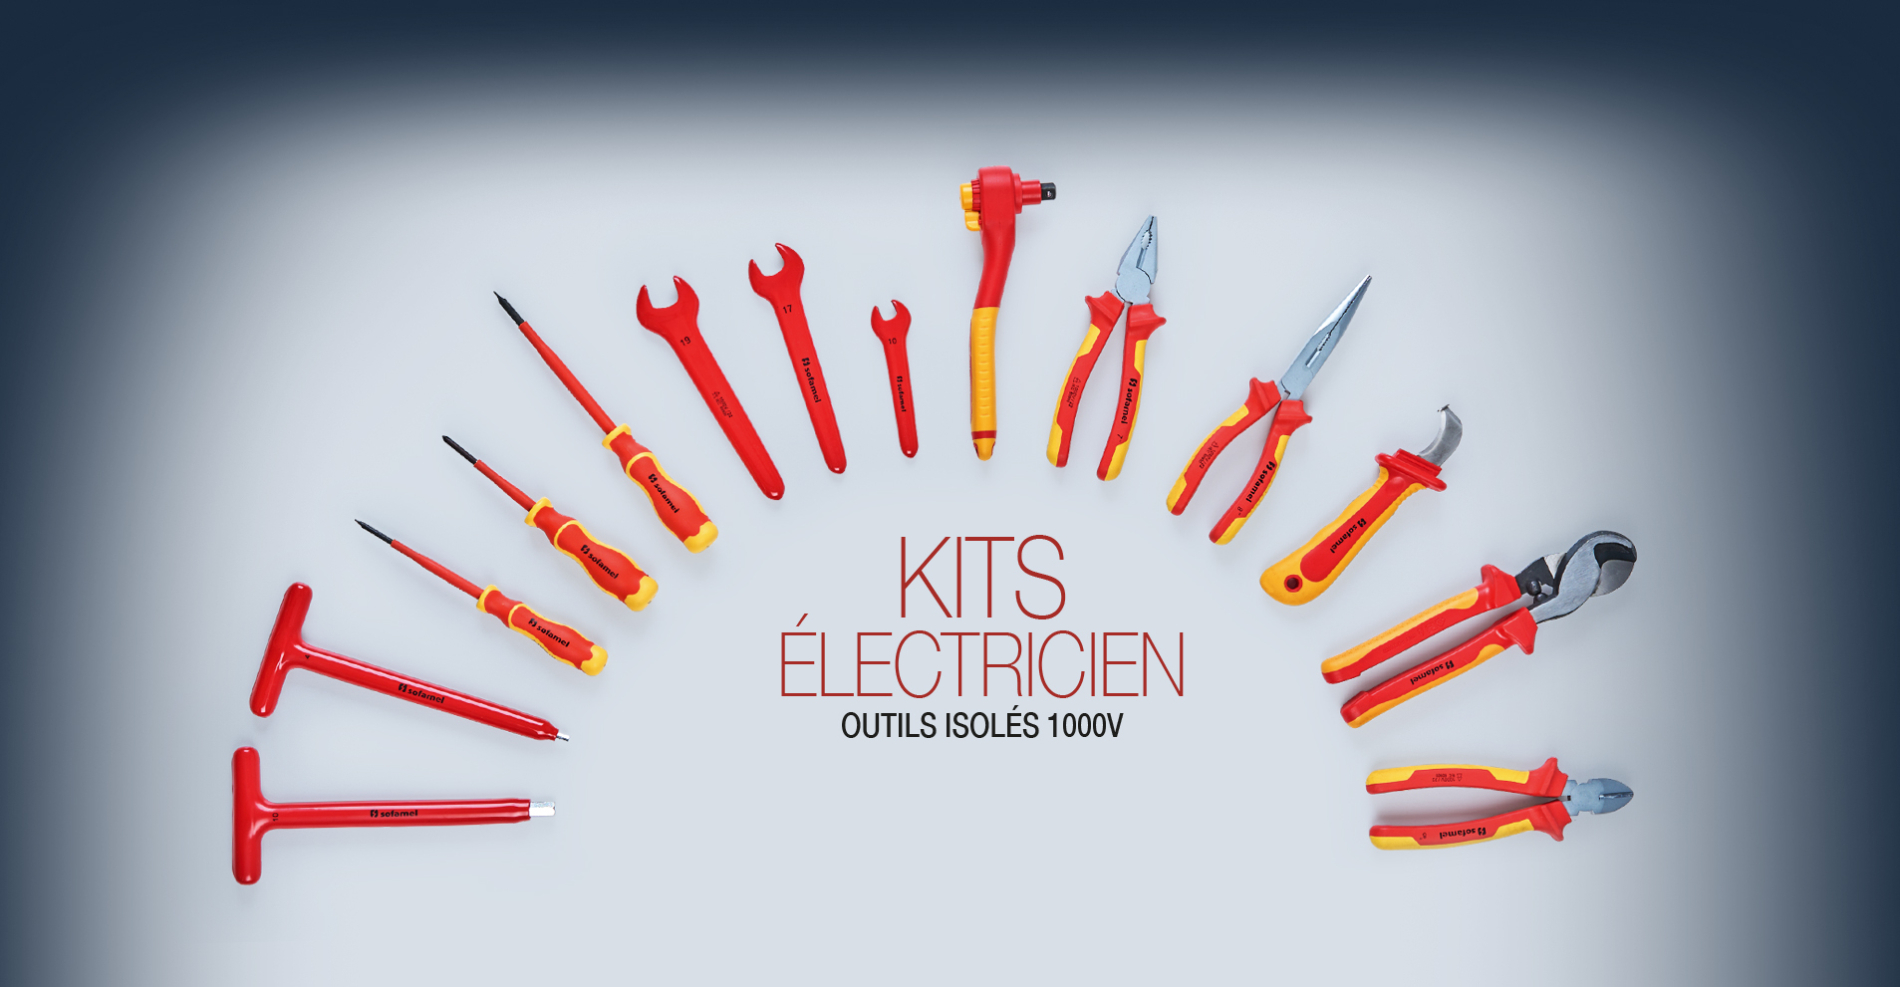 FR kit electricista